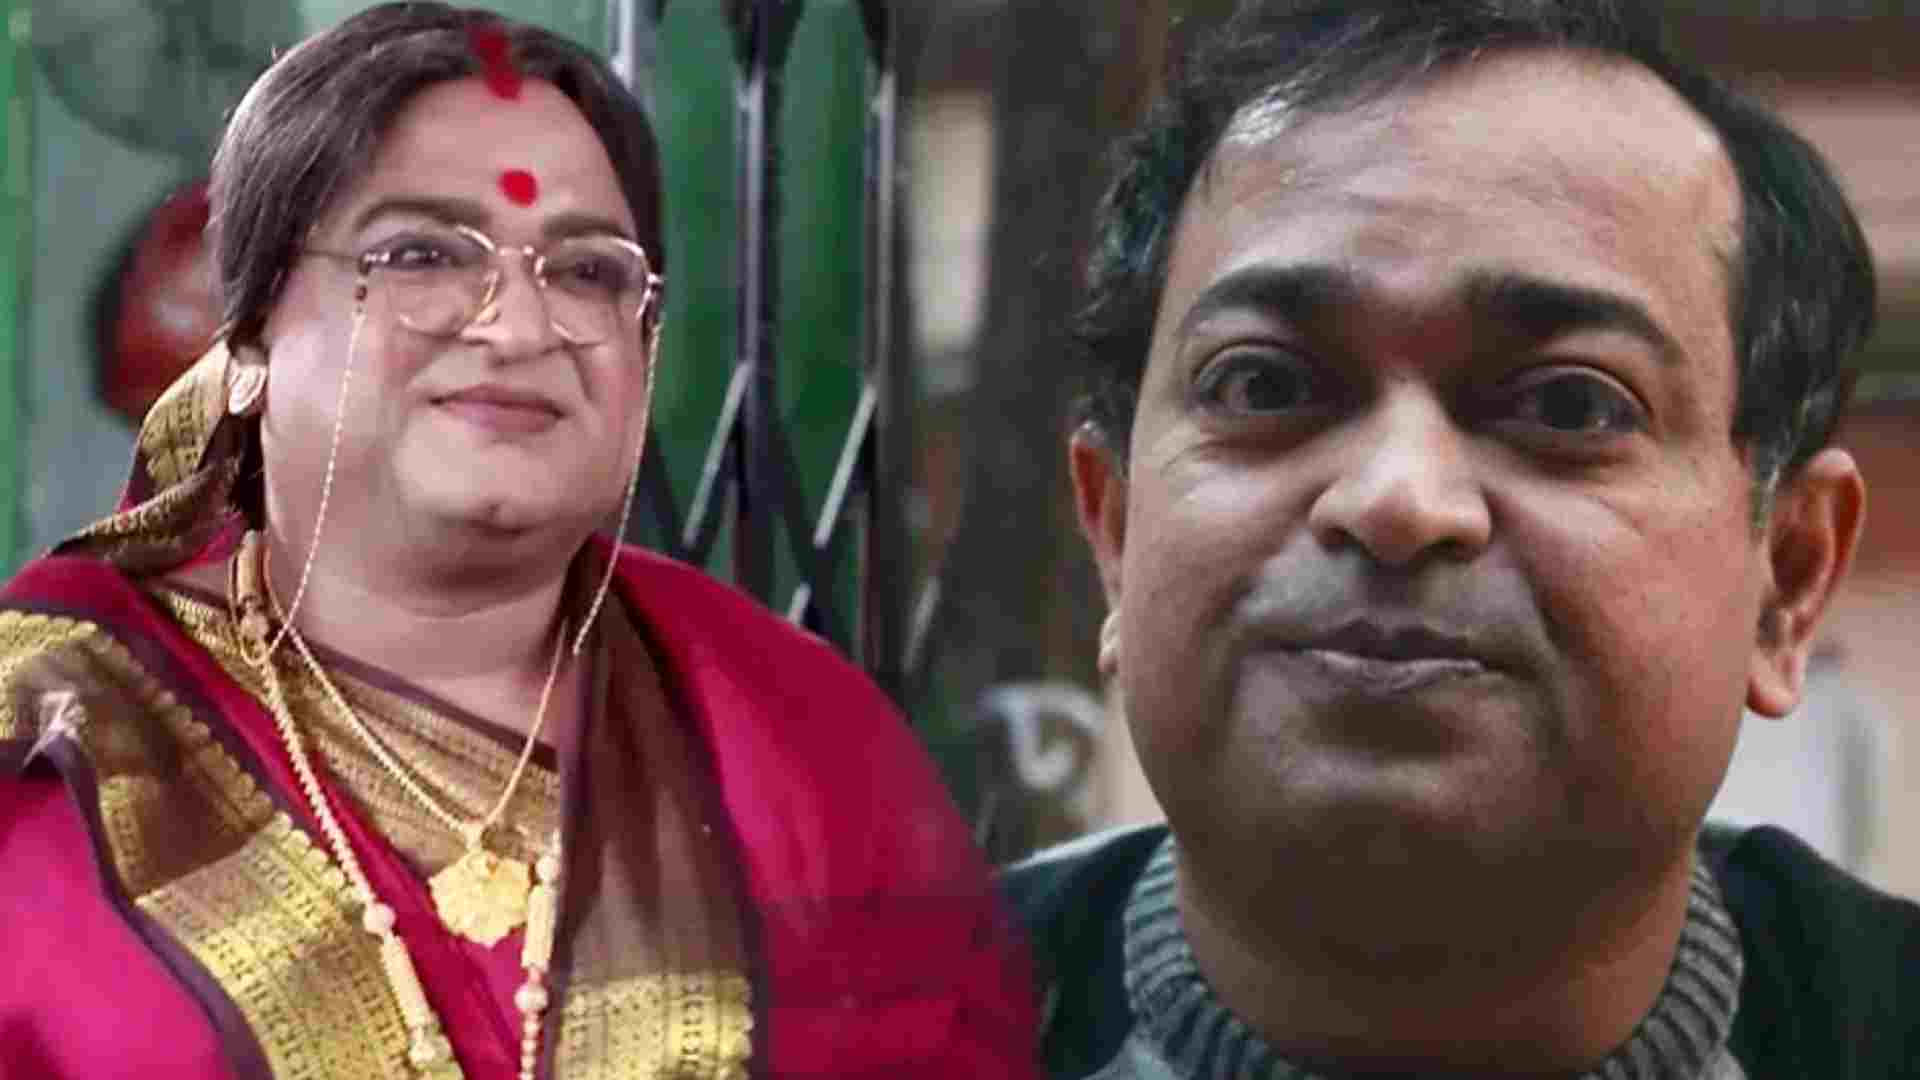 bengali serial actor pradip dhar aka batabyal dressed women in serial